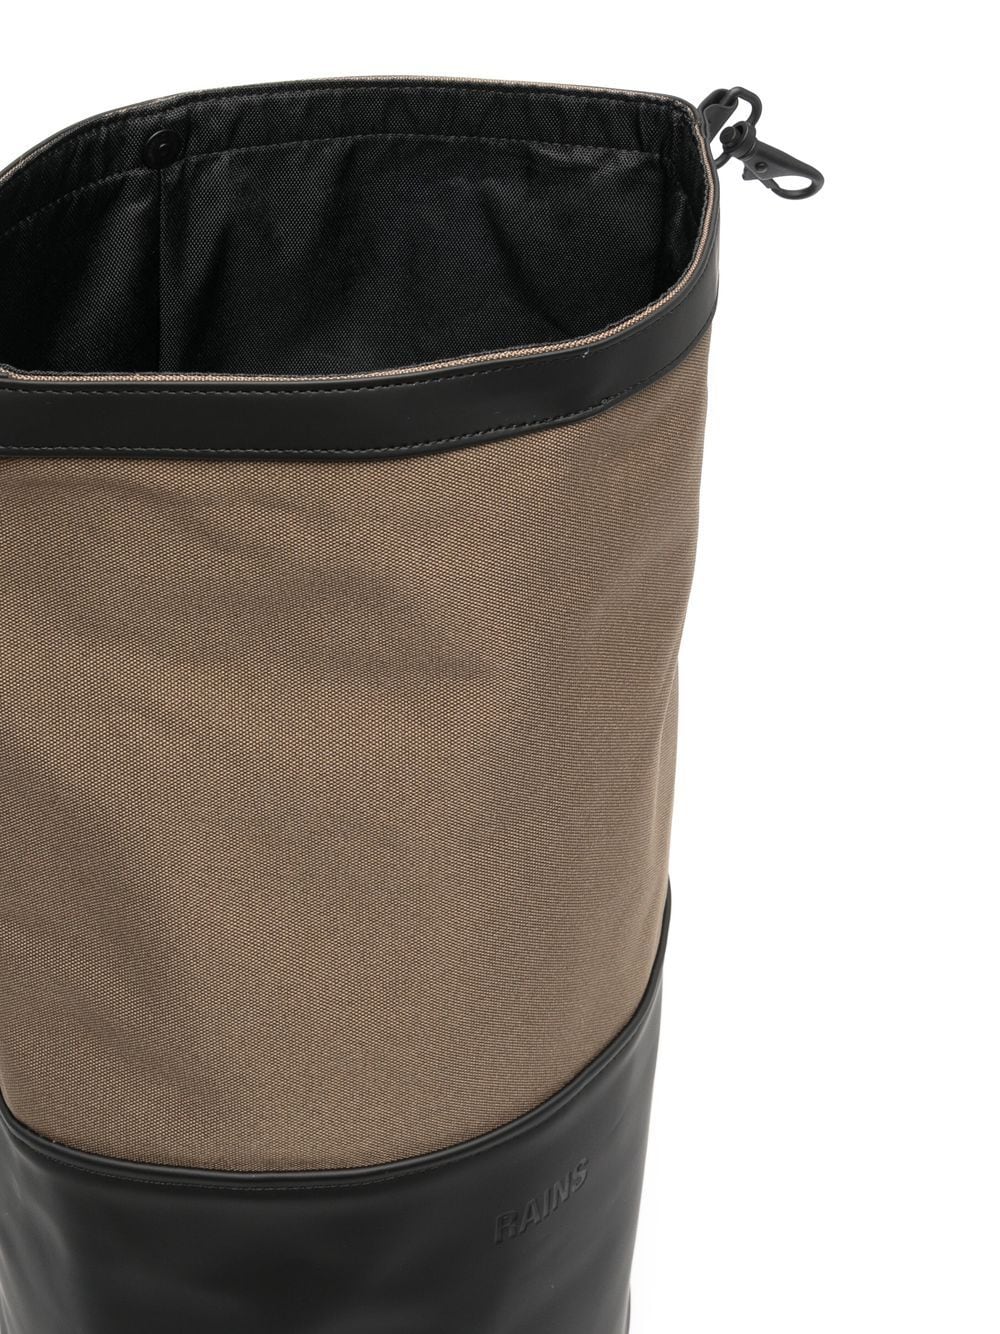 Rains sling bucket bag mini in black colourblock